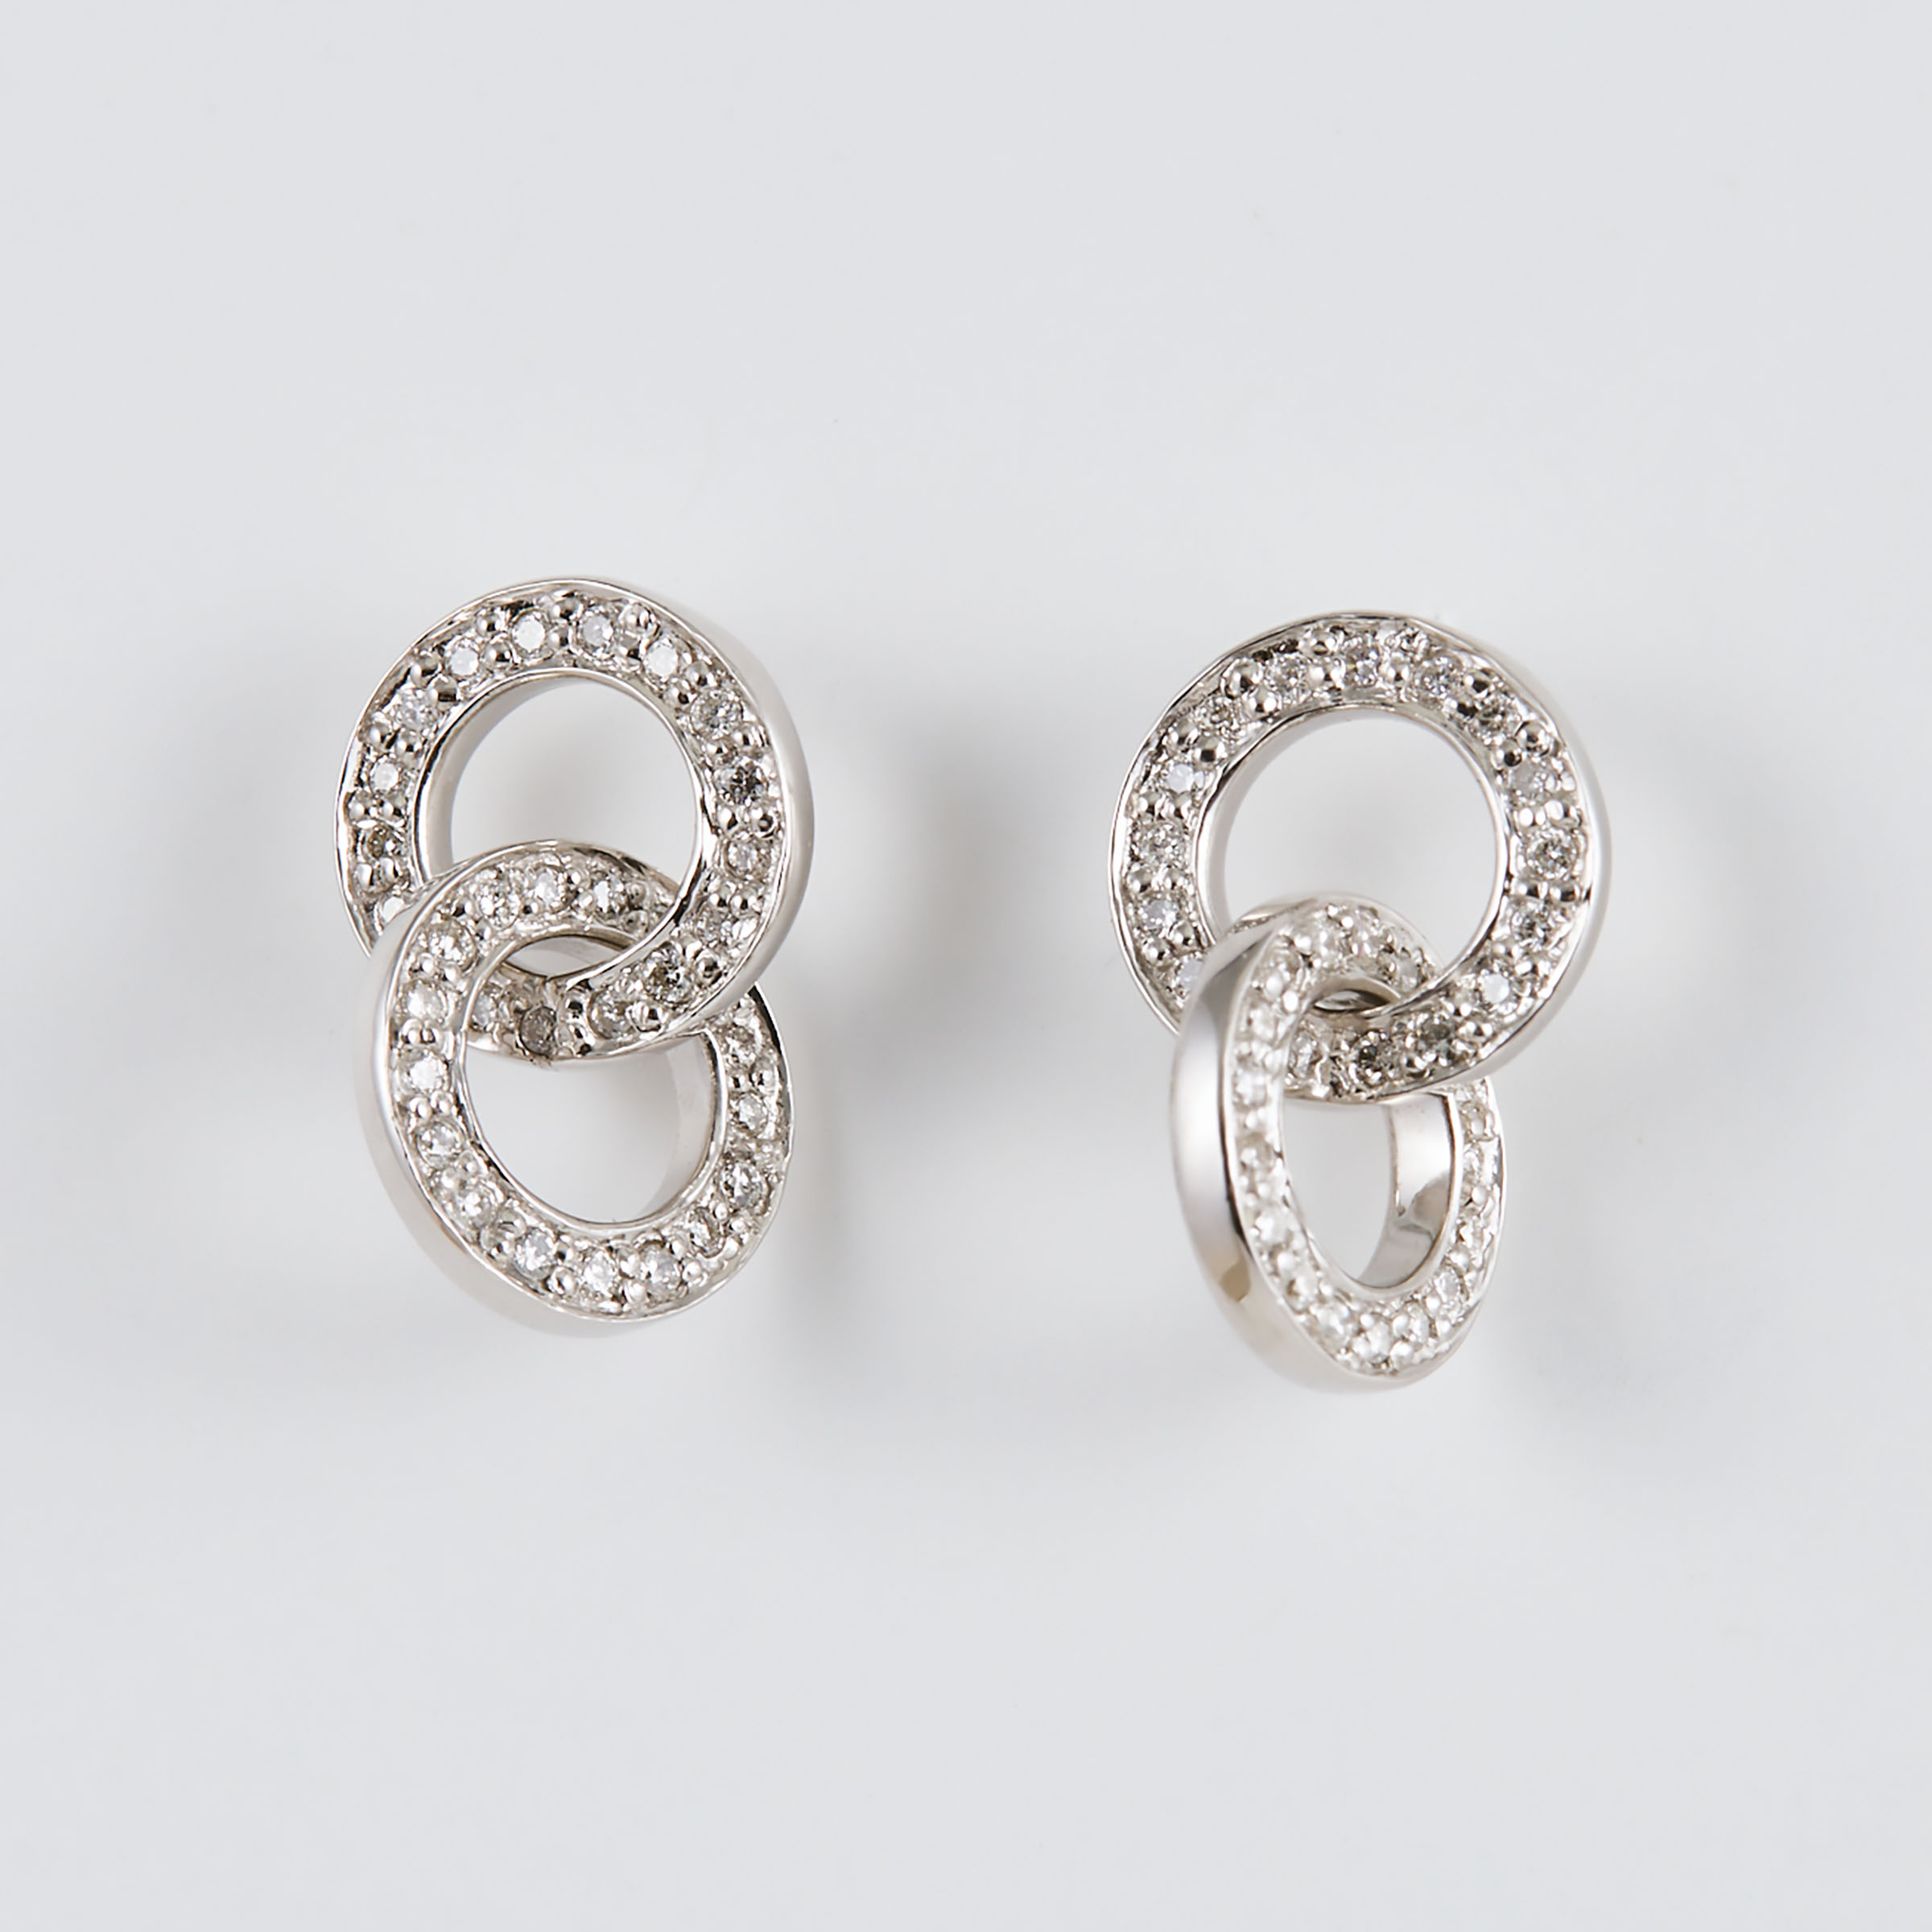 Pair Of 18k White Gold Drop Earrings